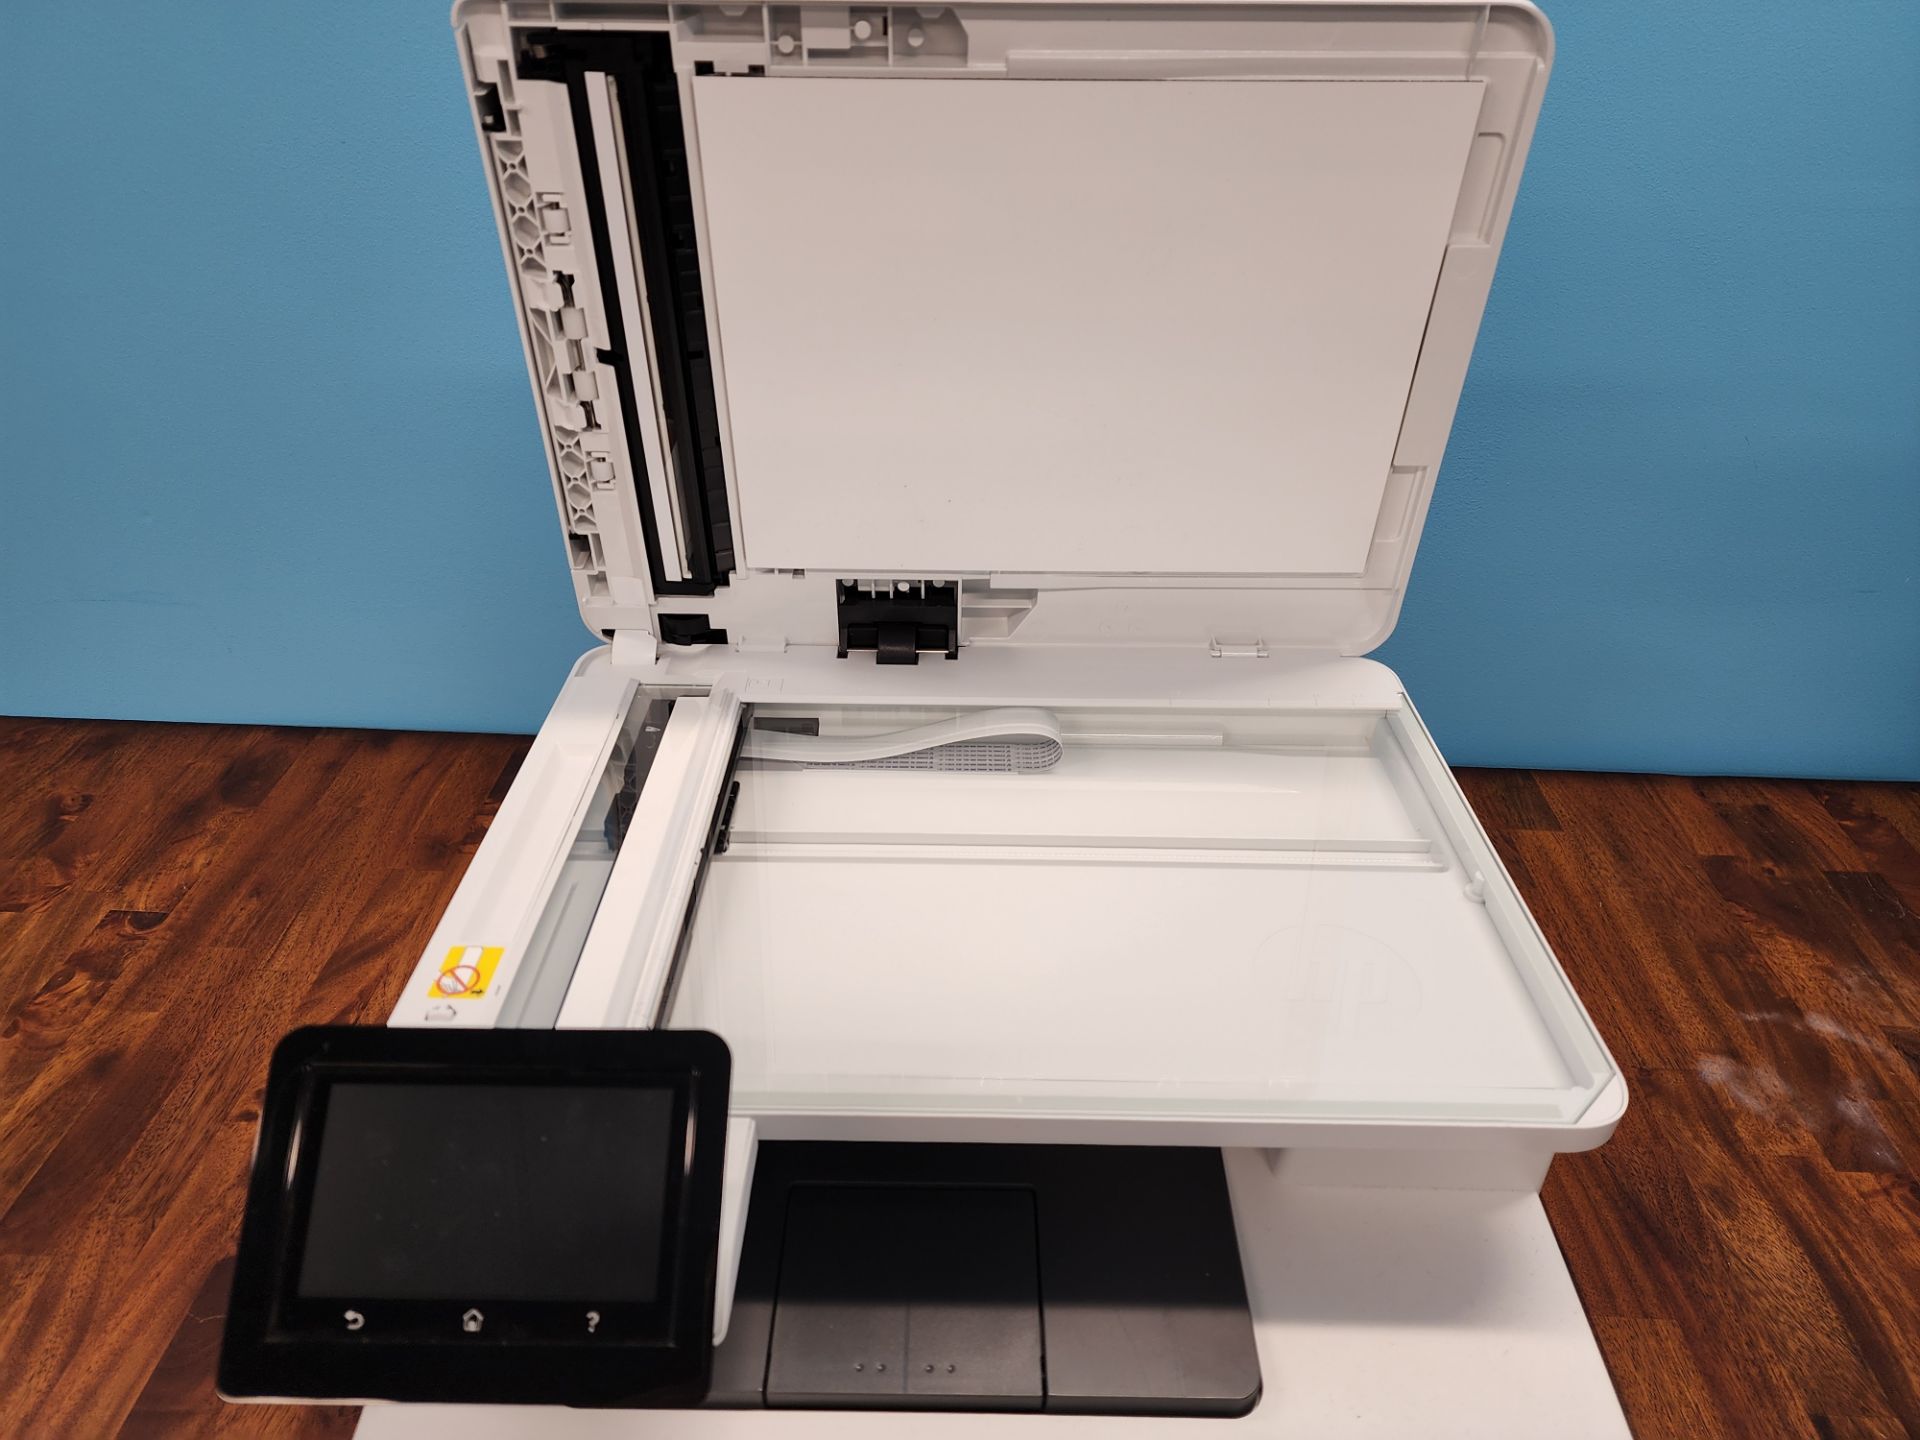 HP Color LaserJet Pro MFP M479fdn Printer - Image 5 of 8